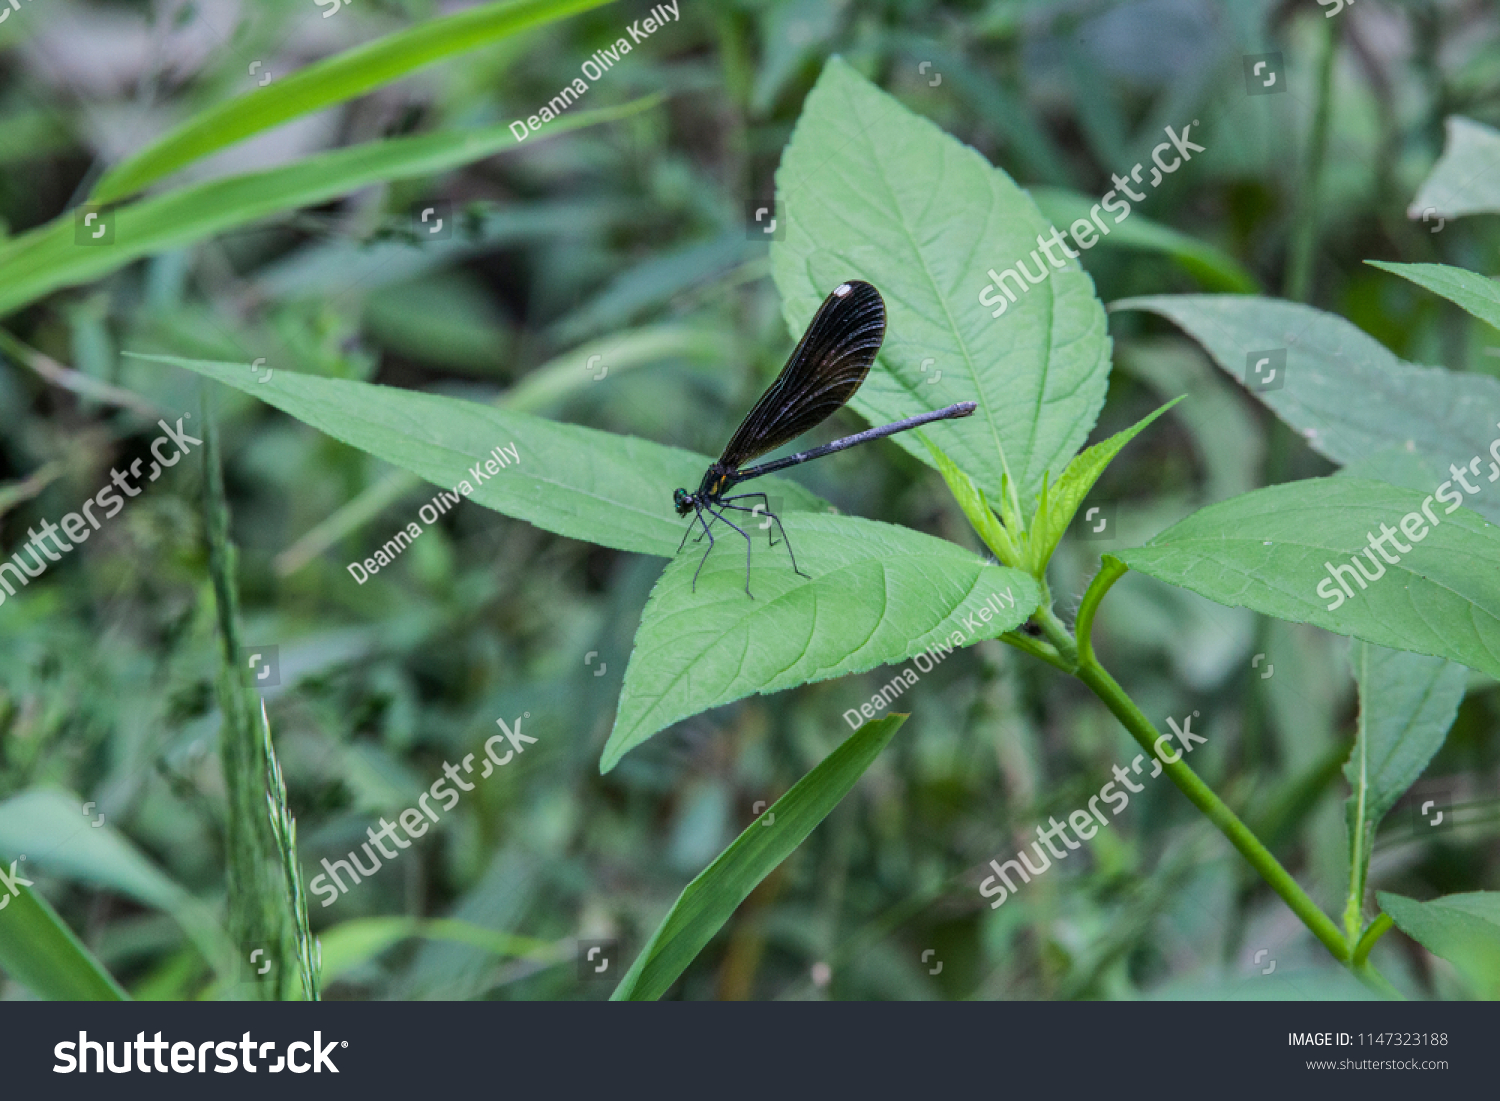 A female Ebony Jewelwing Damselfly sitting on a Leaf in a forest #1147323188